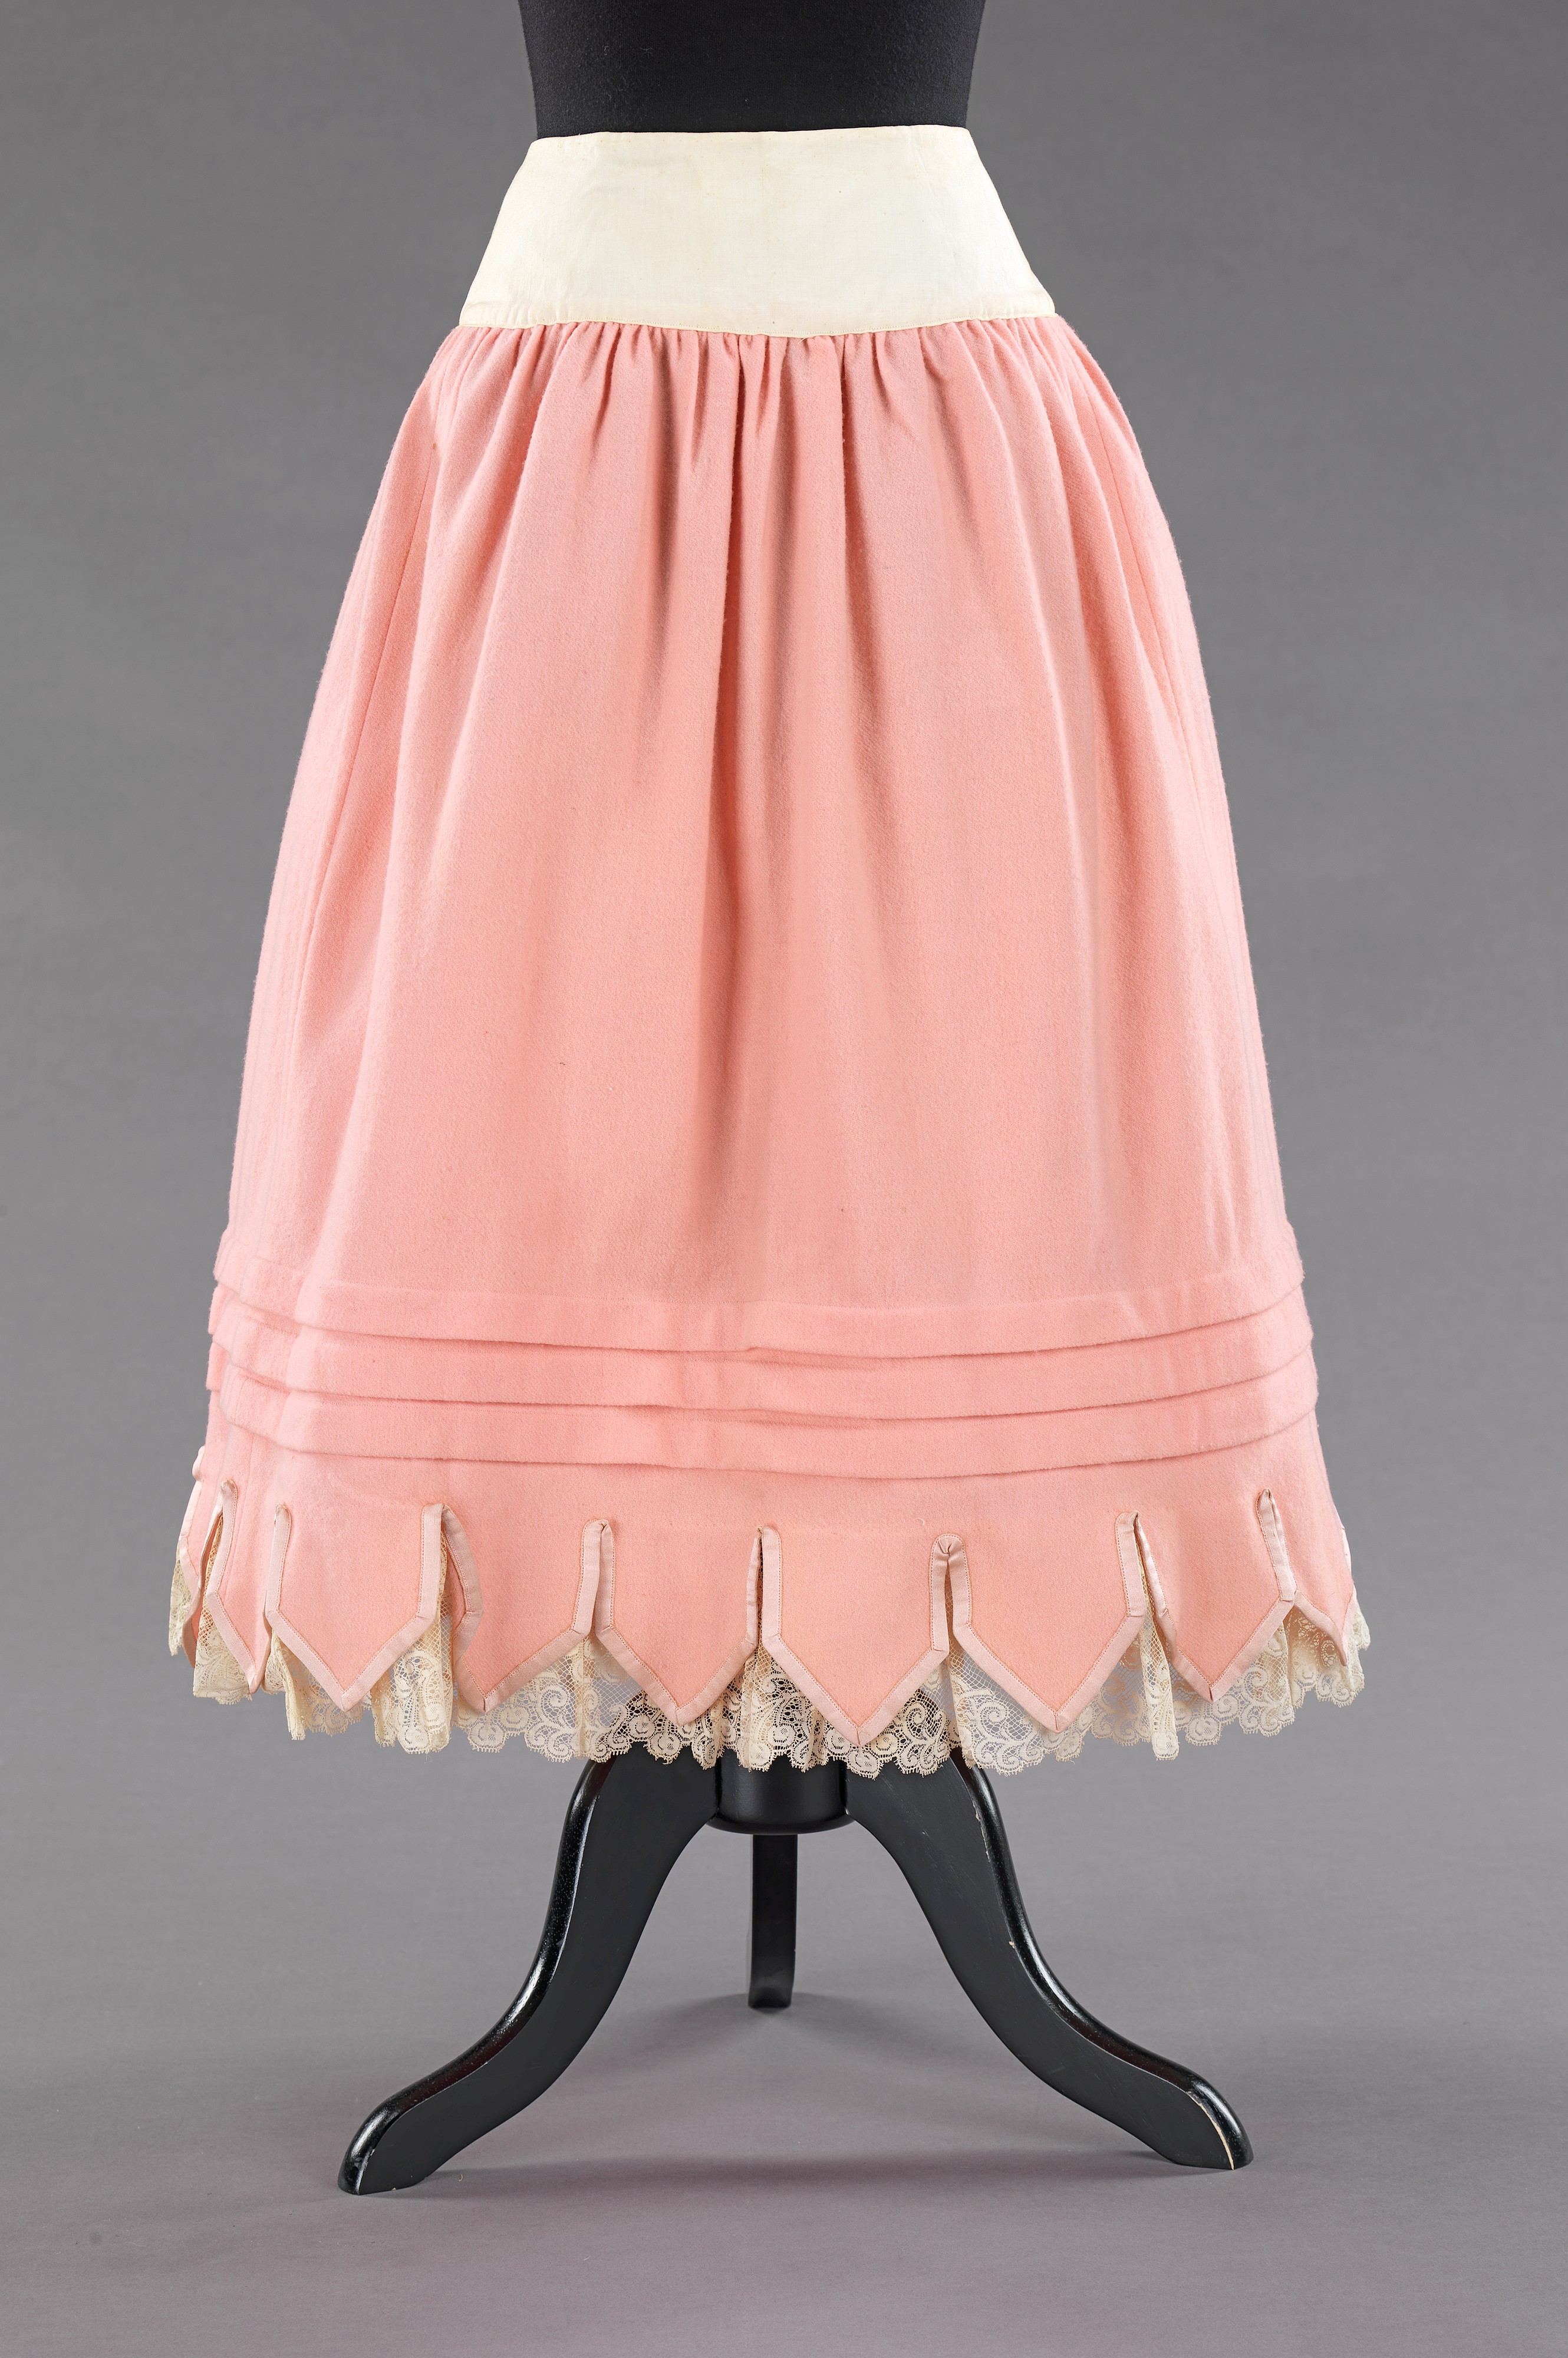 Traditional Victorian Petticoat - Red Cotton